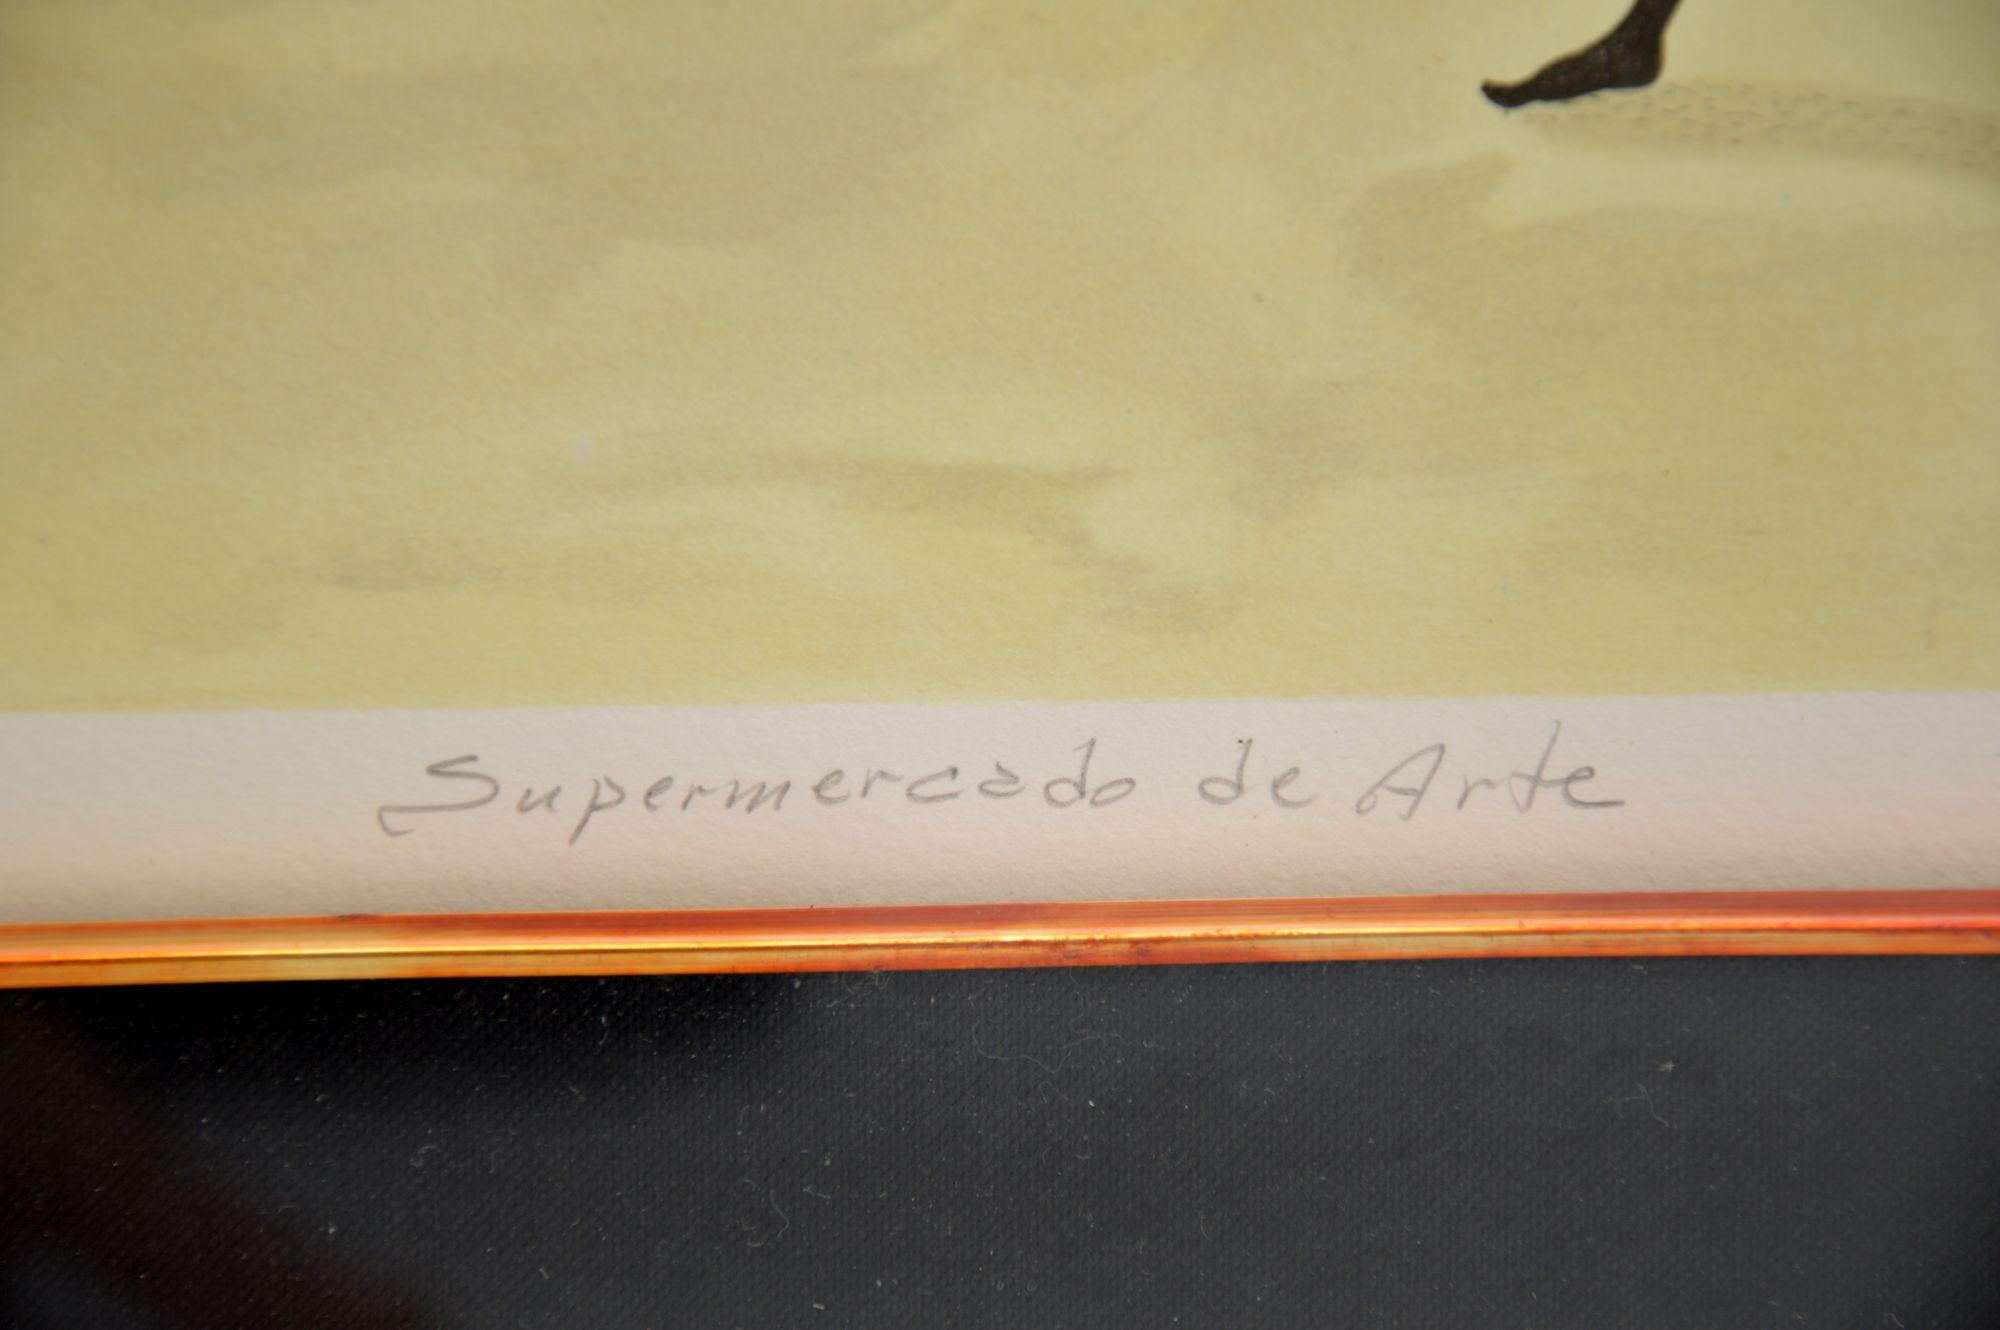 'Supermercado de Arte' - Signed 1960's Lithograph by Guillermo Silva For Sale 1